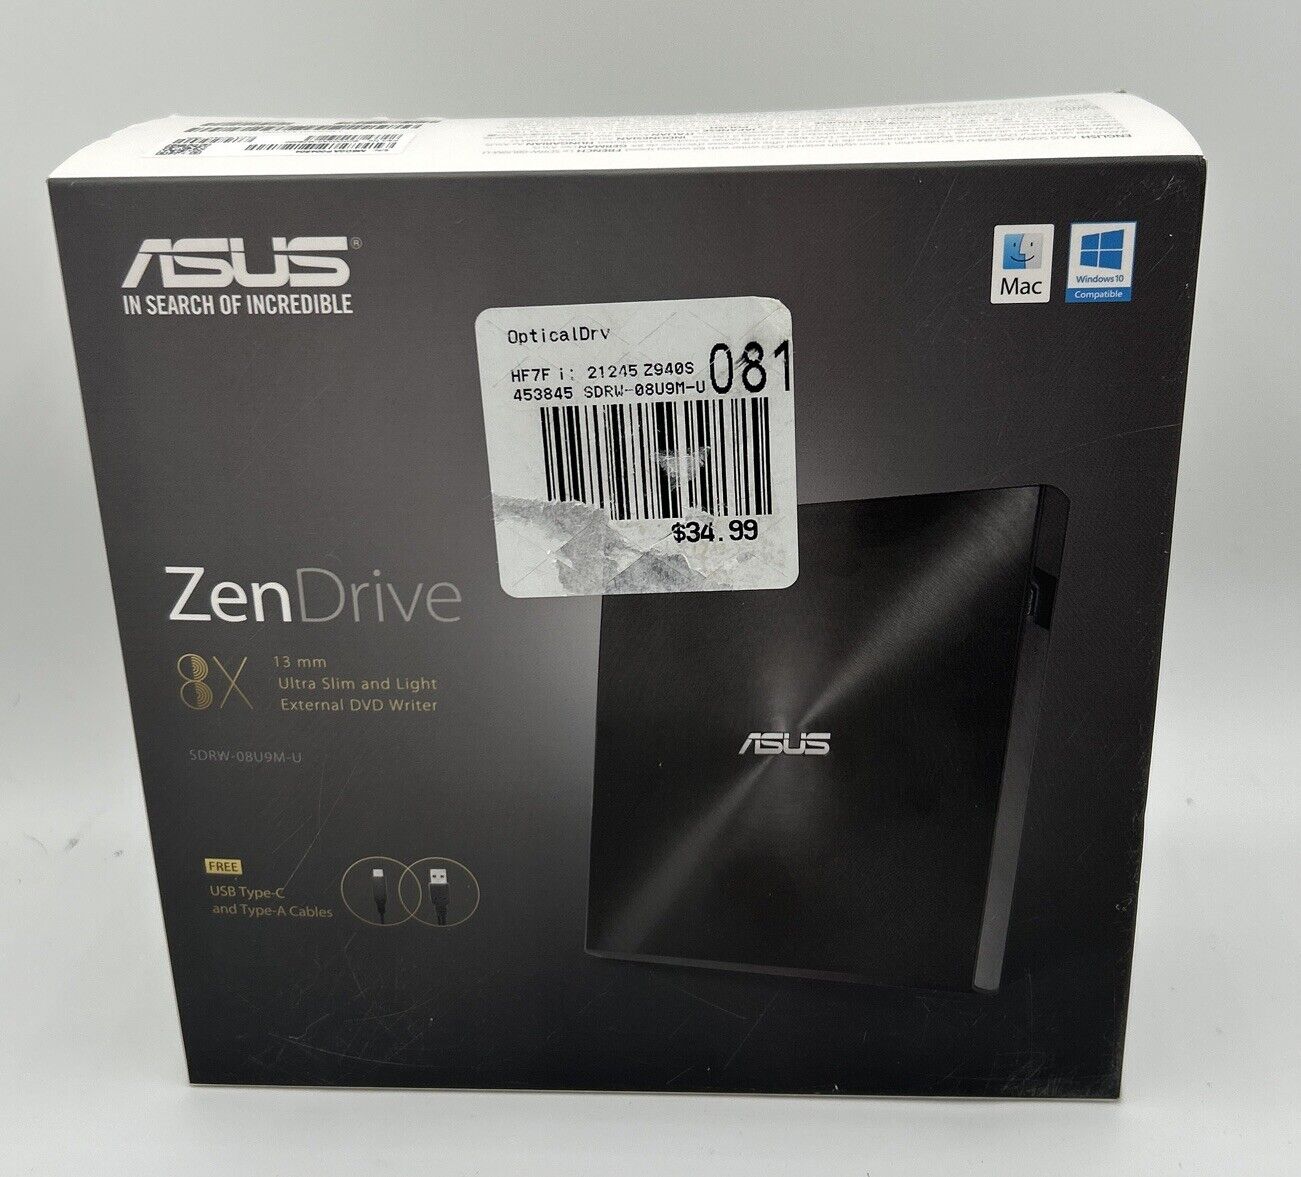 Asus ZenDrive SDRW-08U9M-U -External DVD-Writer - Black NIB